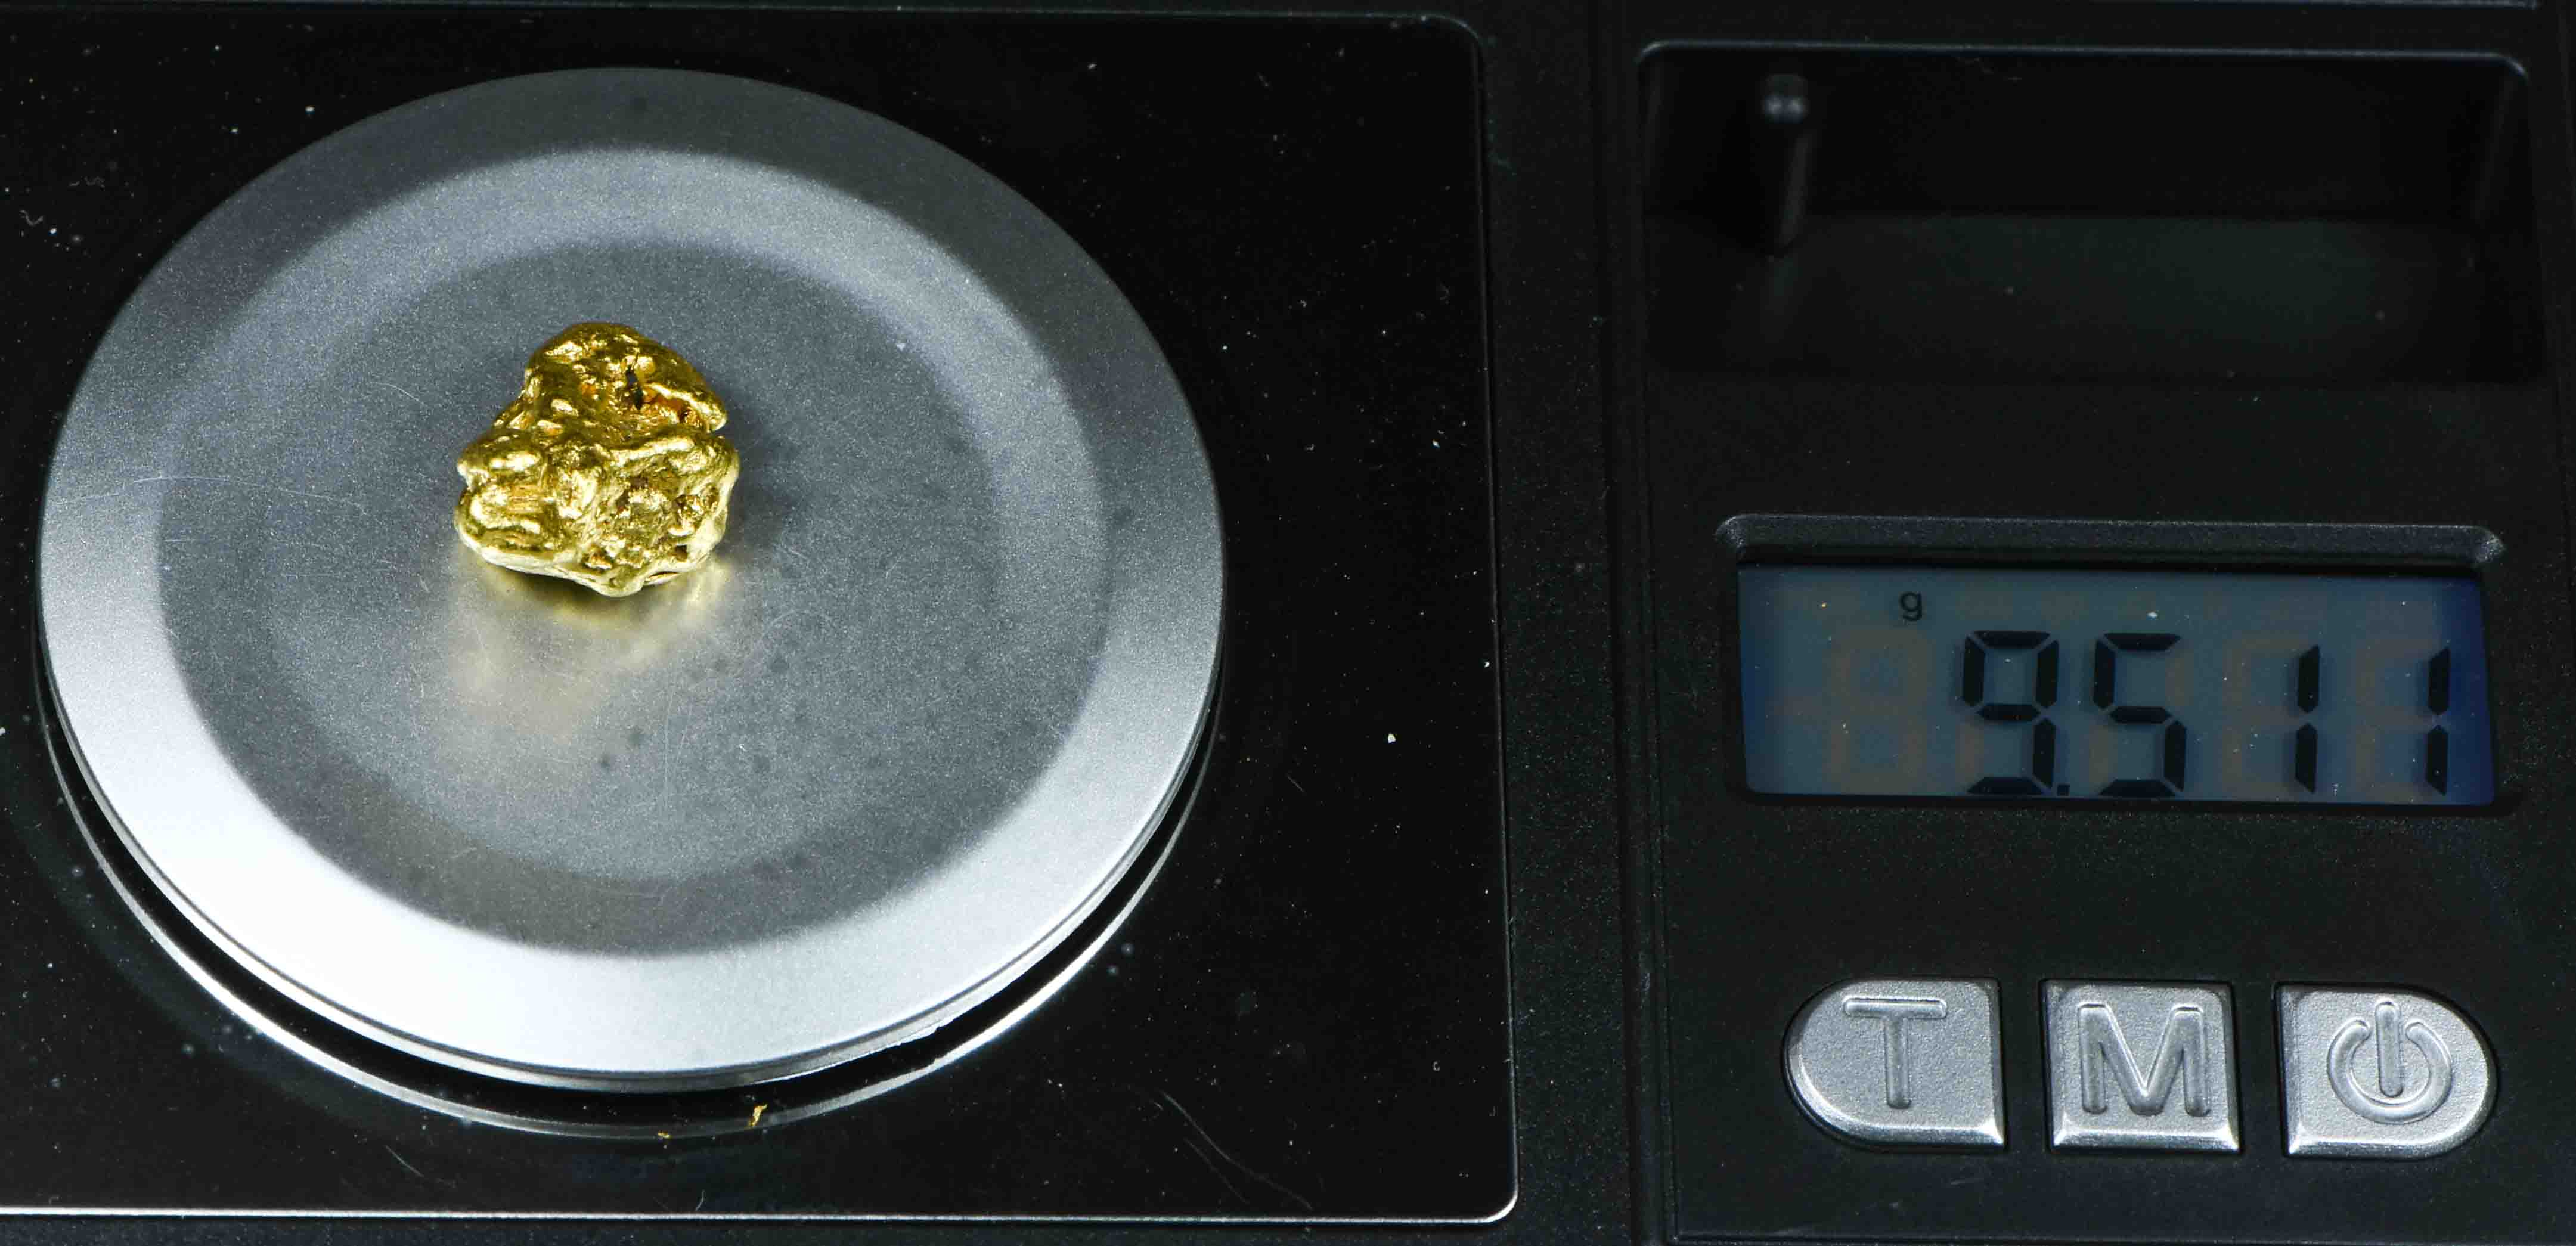 #72 Natural Gold Nugget Montana 9.51 Grams Genuine